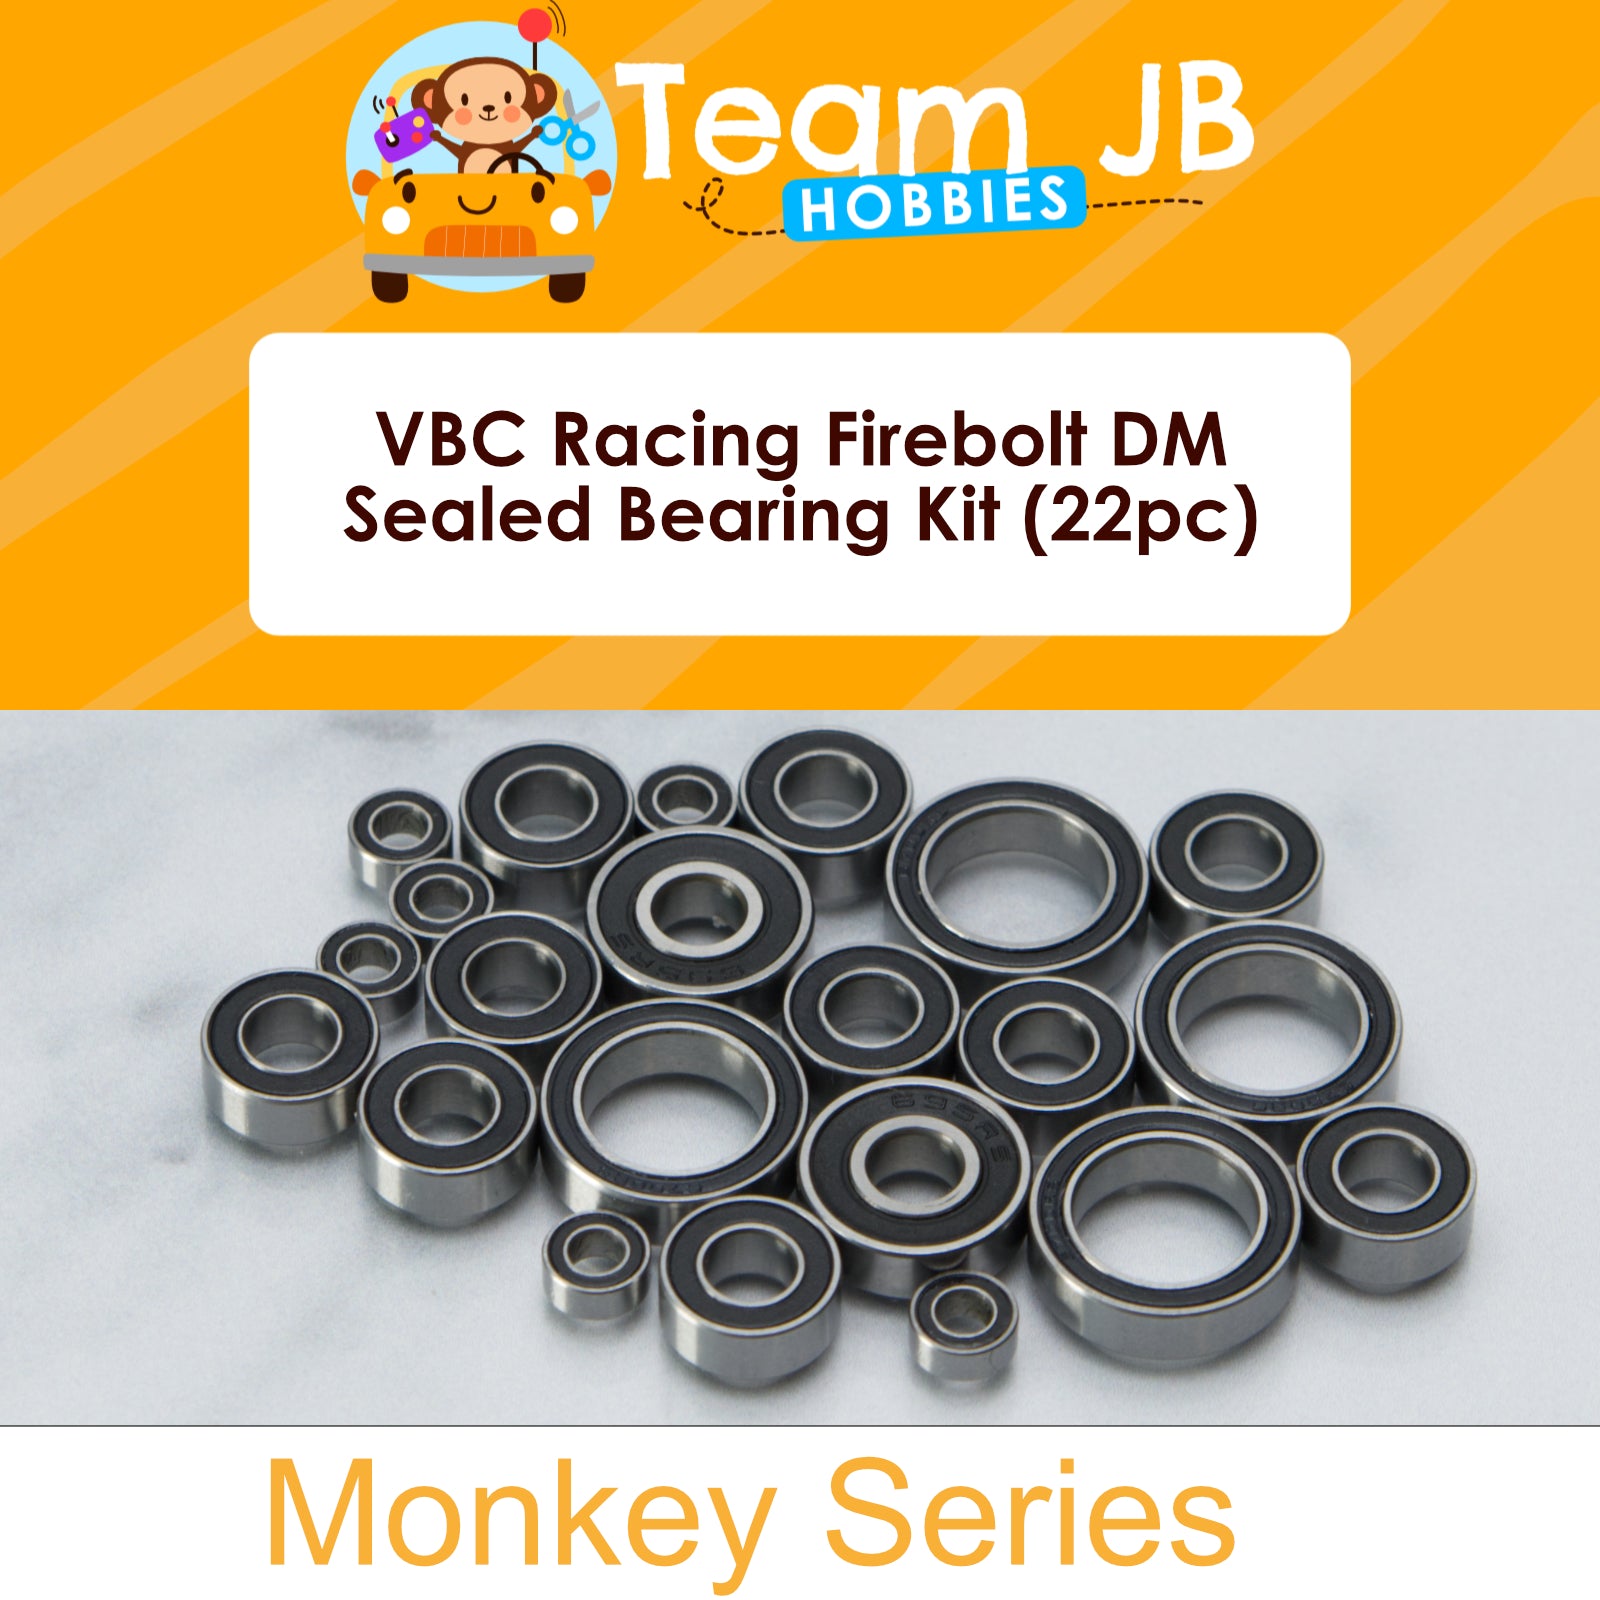 VBC Racing Firebolt DM - Sealed Bearing Kit